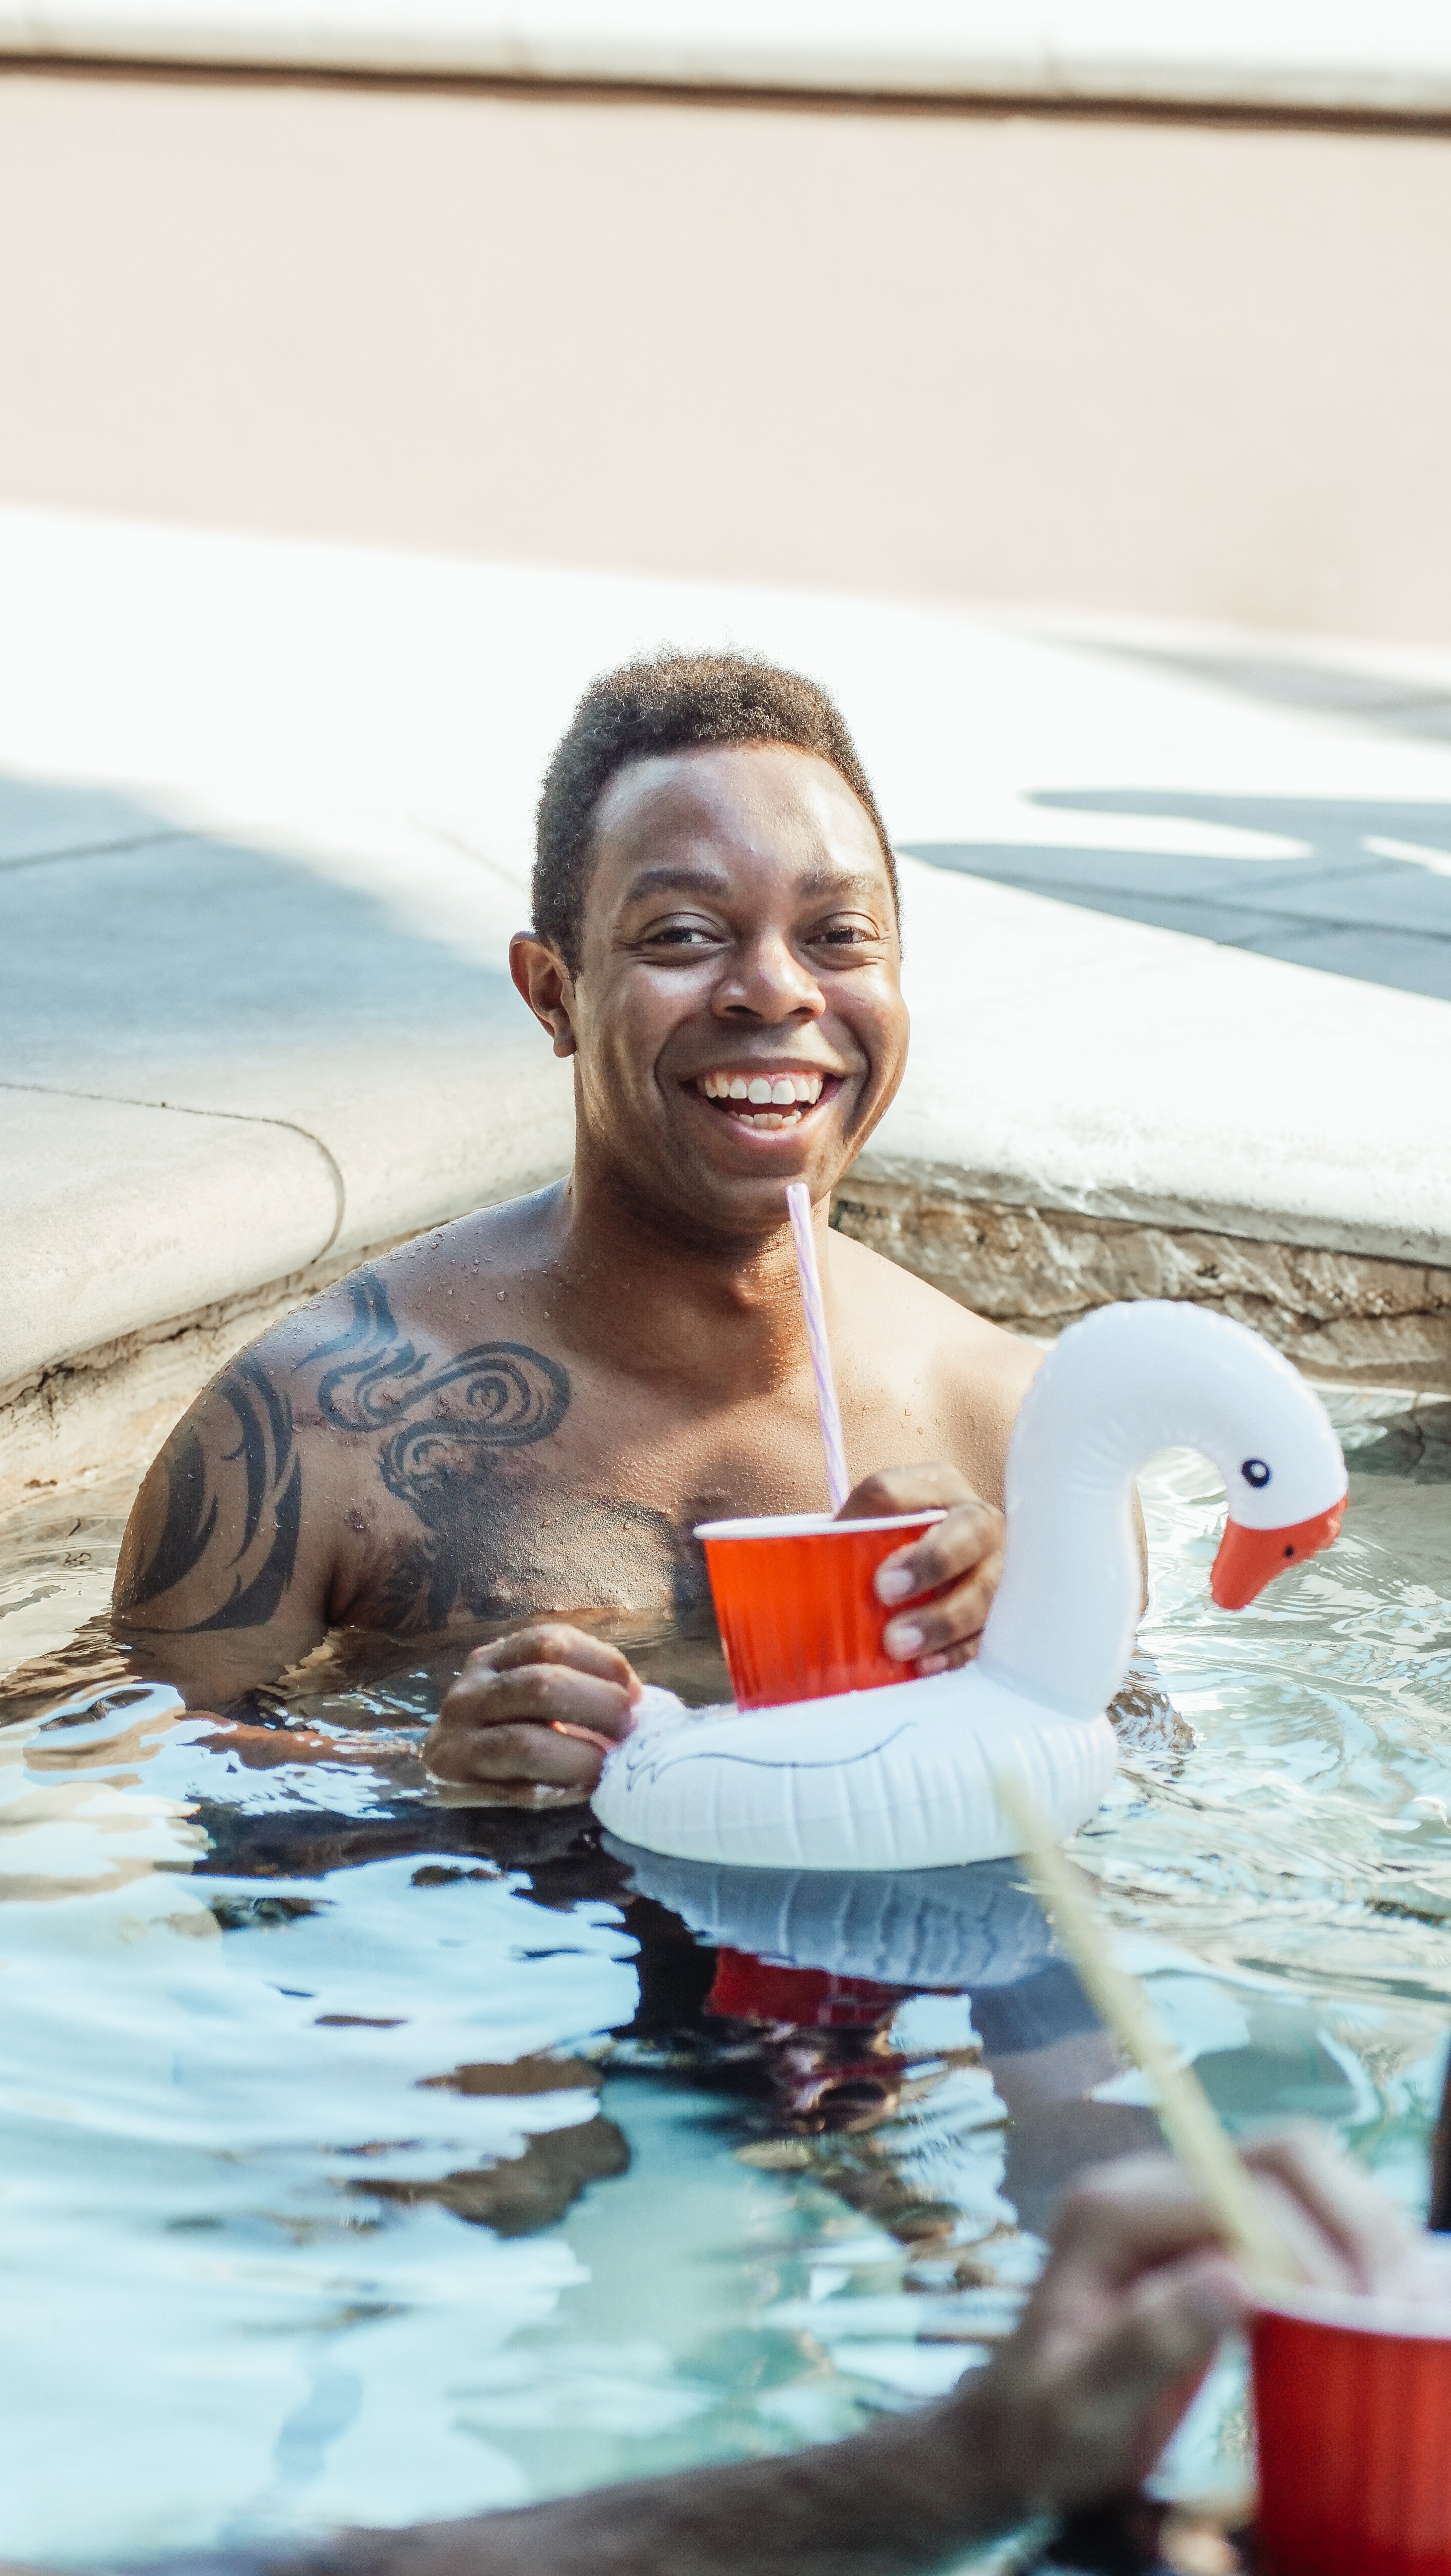 Man with tattoos in swimming pool. | Source: Pexels/ Kendel Media